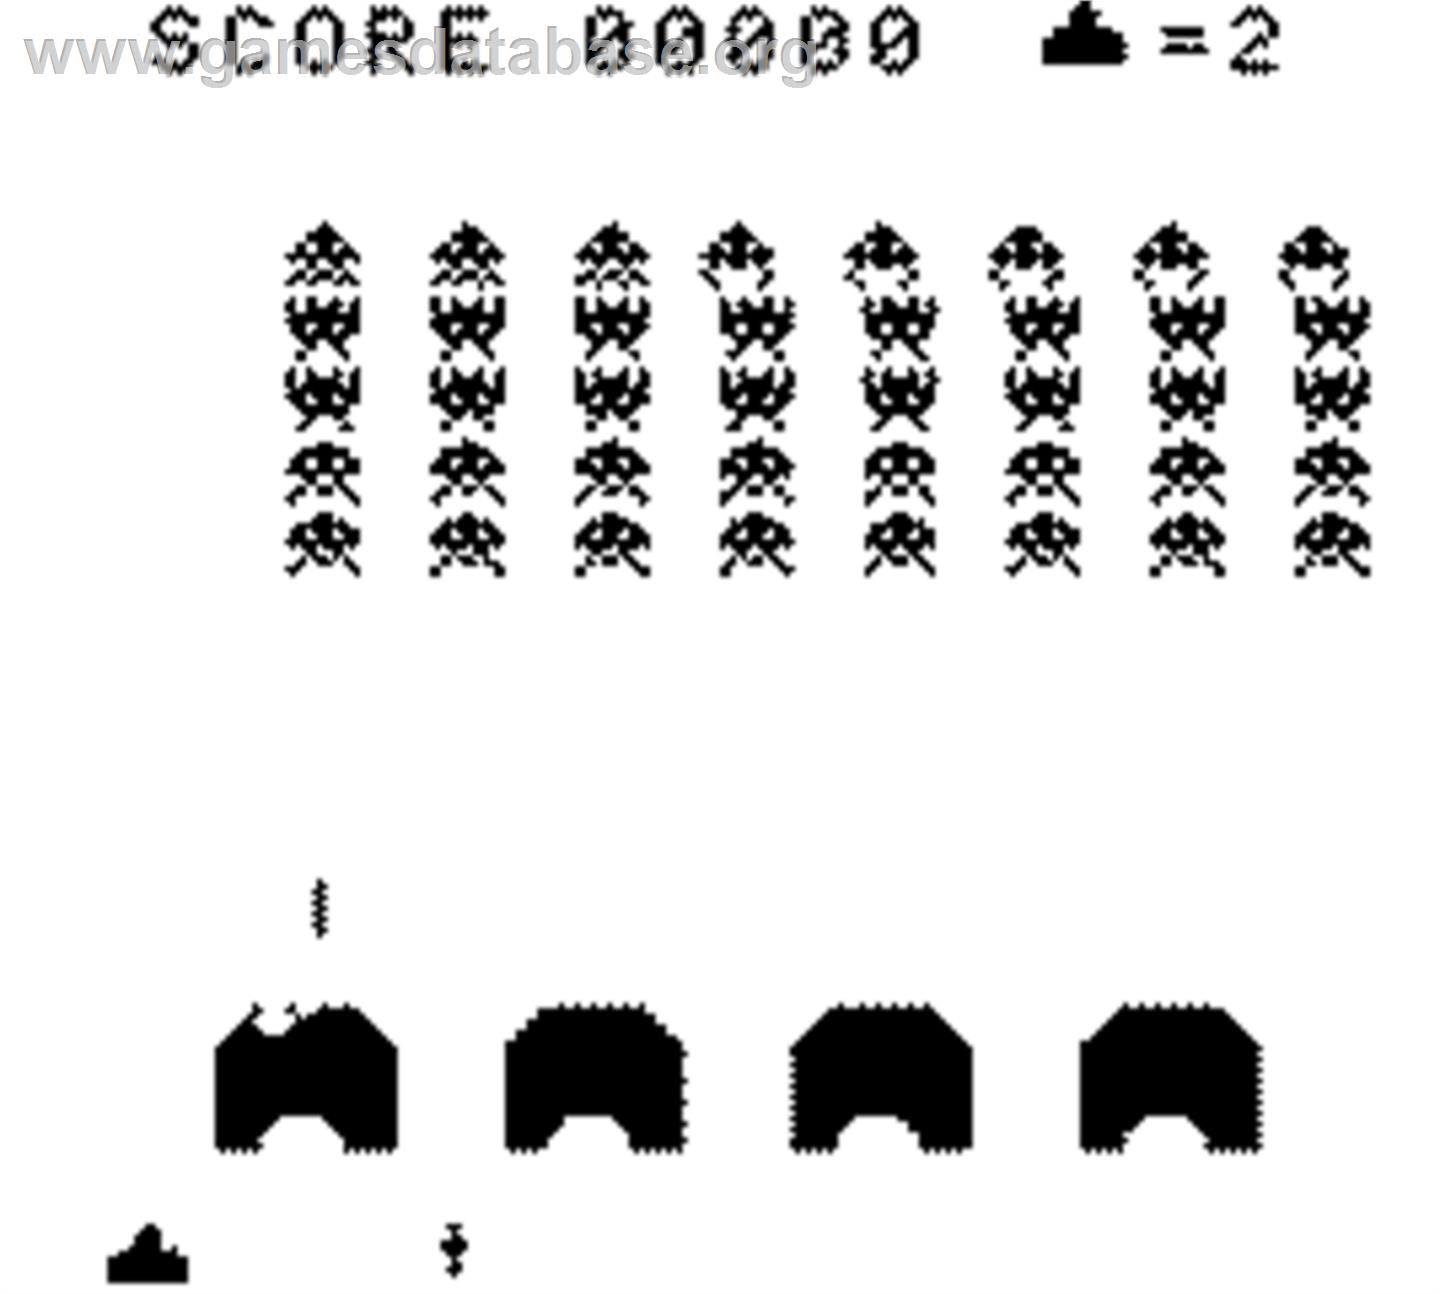 Space Invaders - Nintendo Game Boy - Artwork - In Game